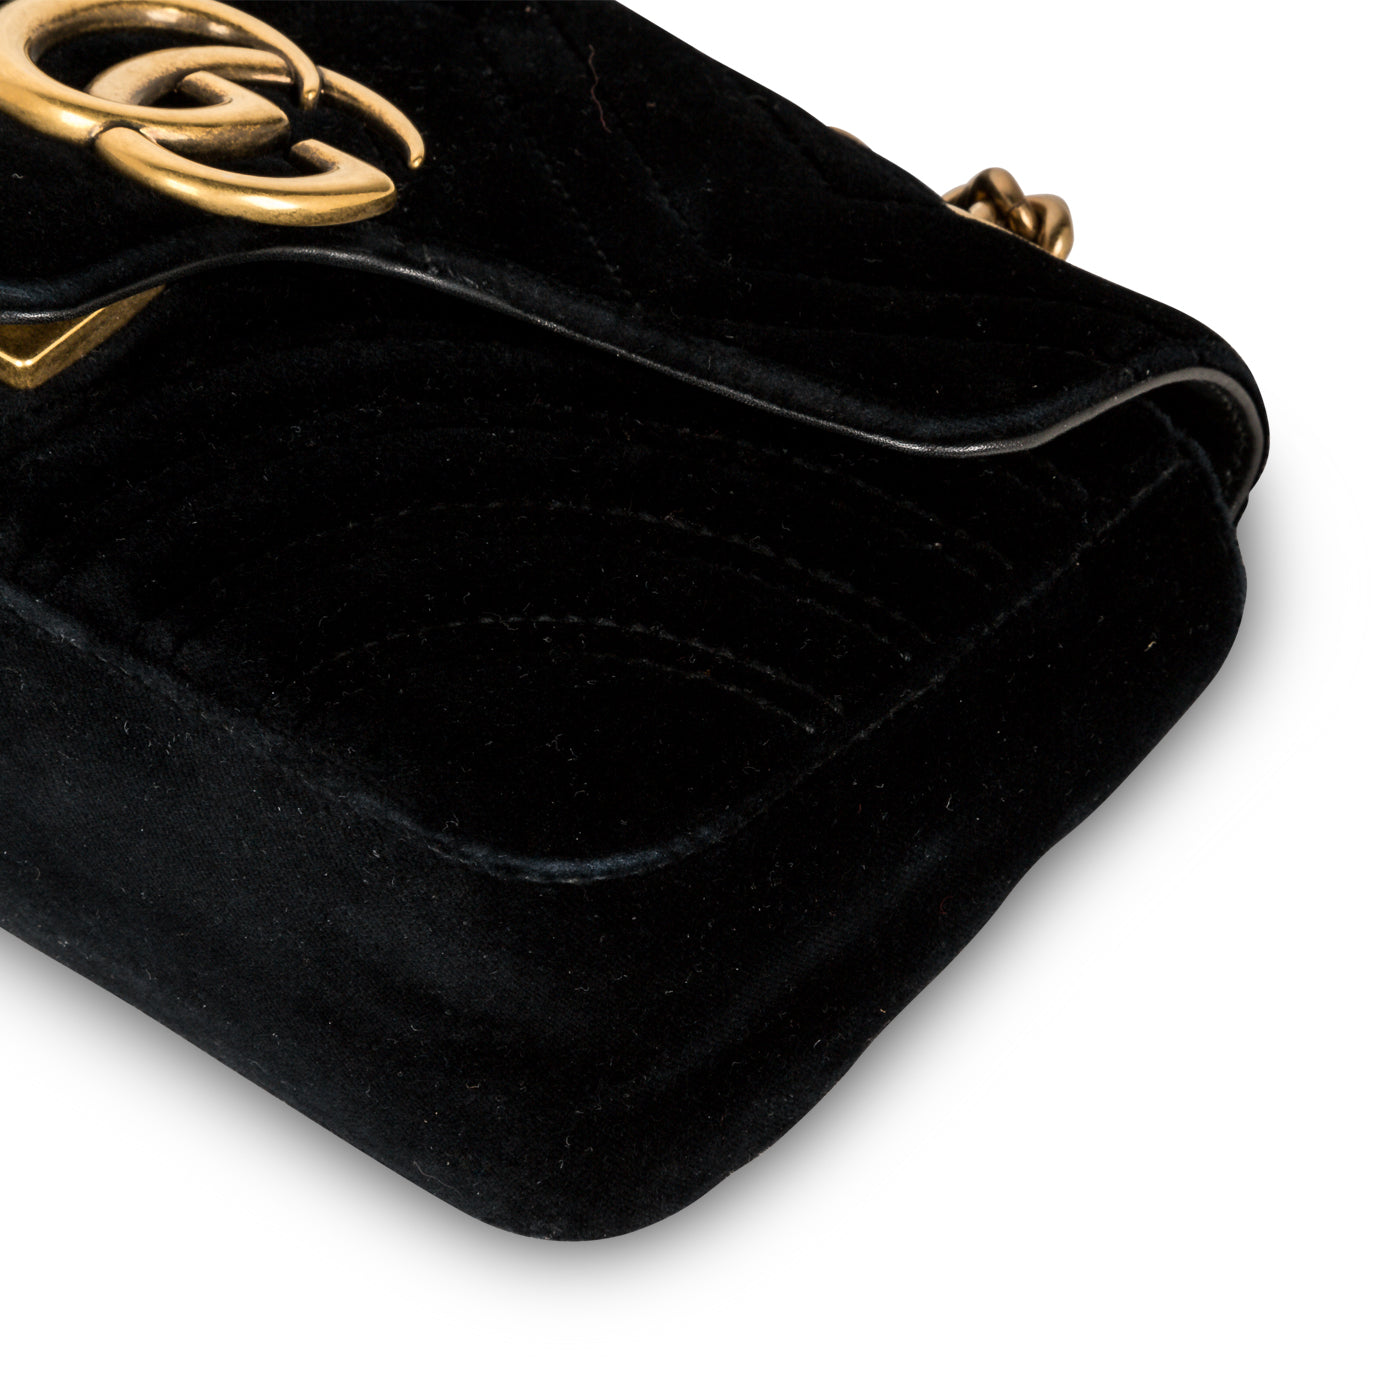 Gucci Mini Black Velvet GG Marmont Shoulder Bag — BLOGGER ARMOIRE